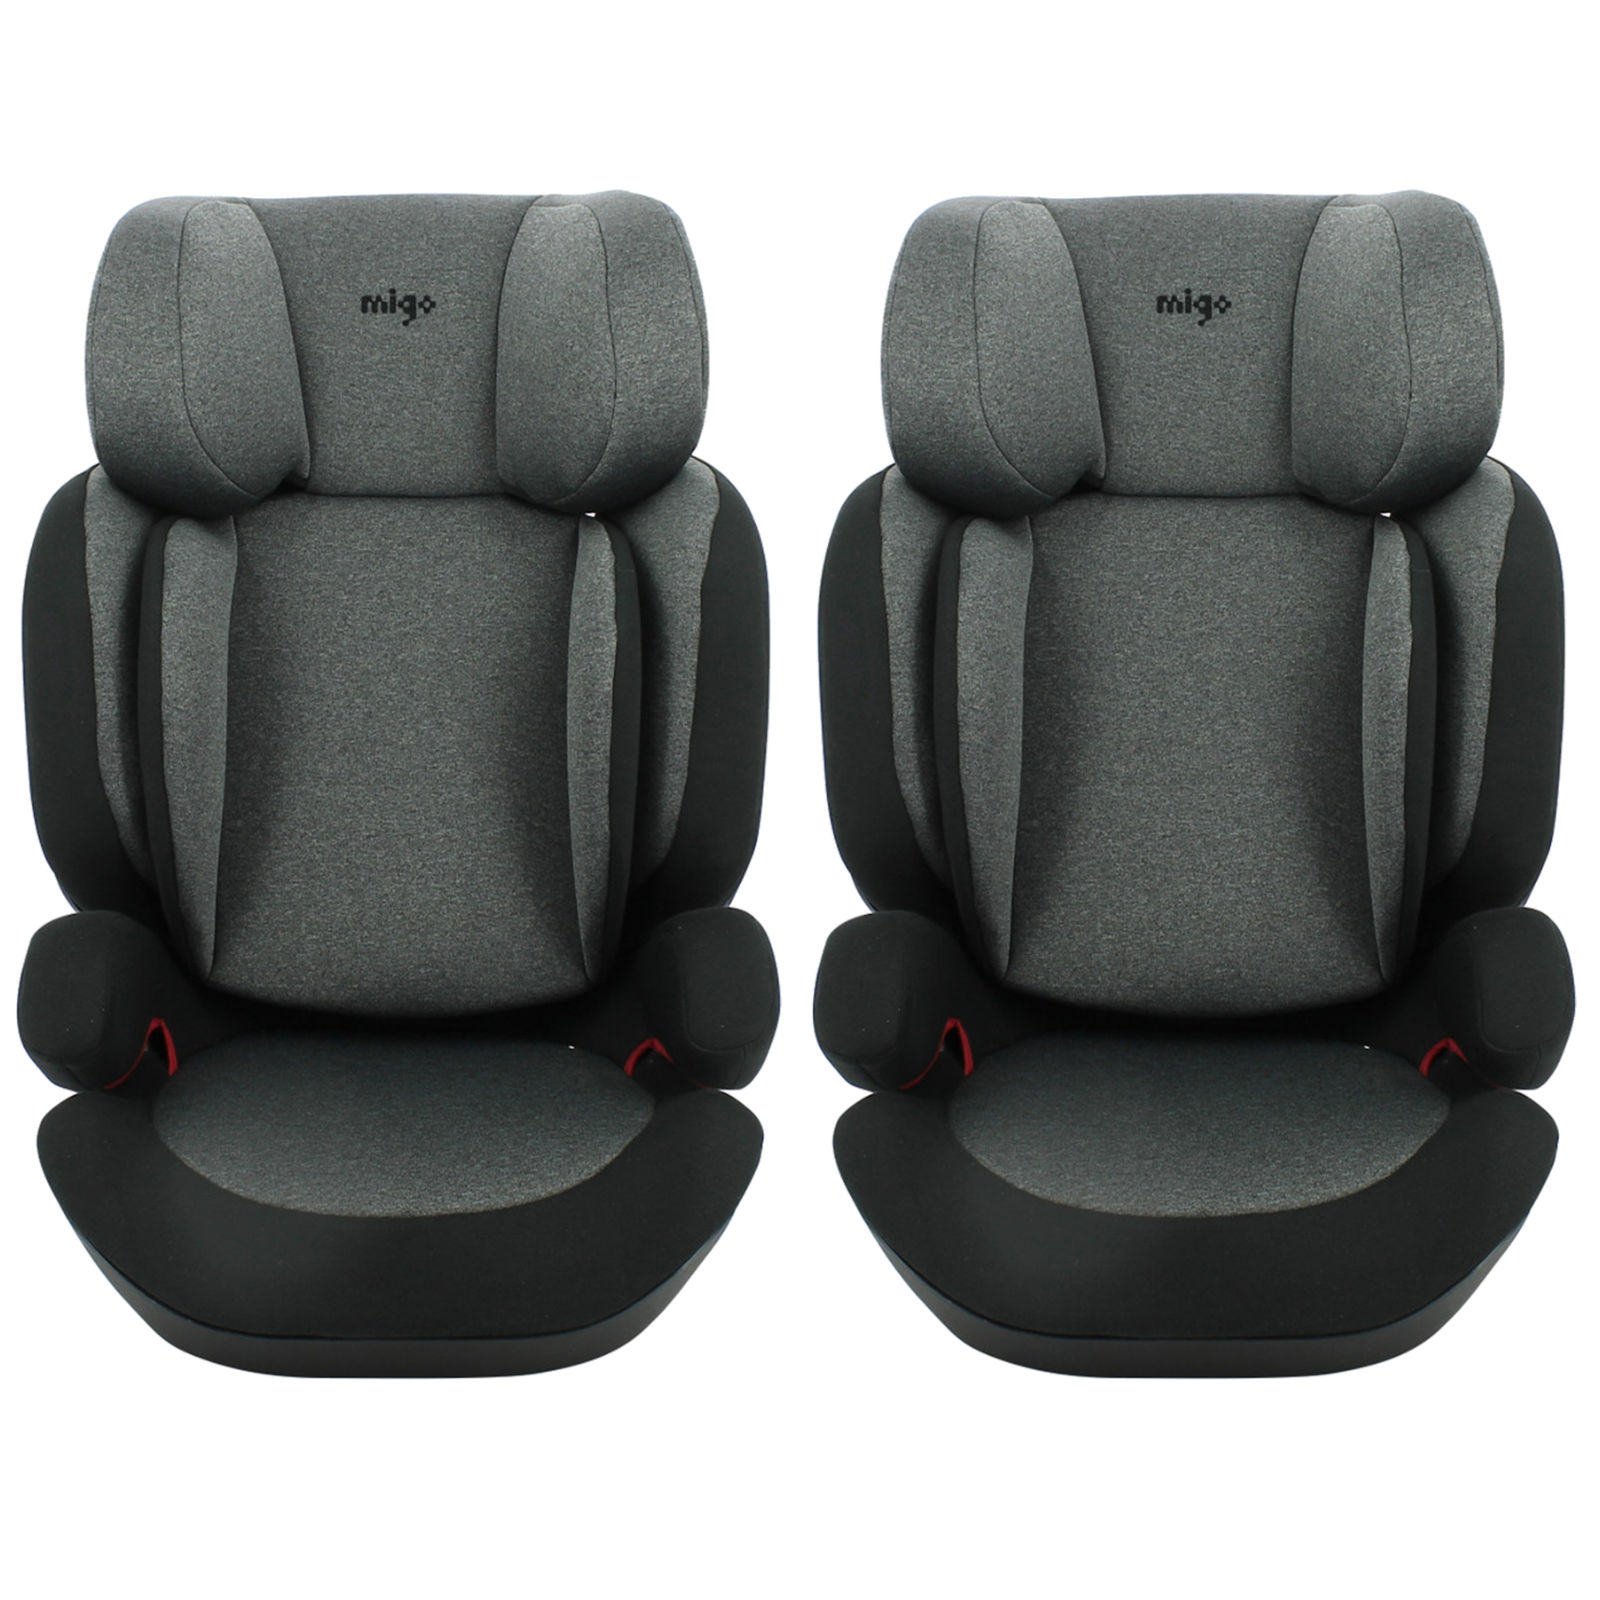 Migo Mirage Luxury Group 2/3 ISOFIX Car Seat (2 Pack) - Grey (4-12 Years)